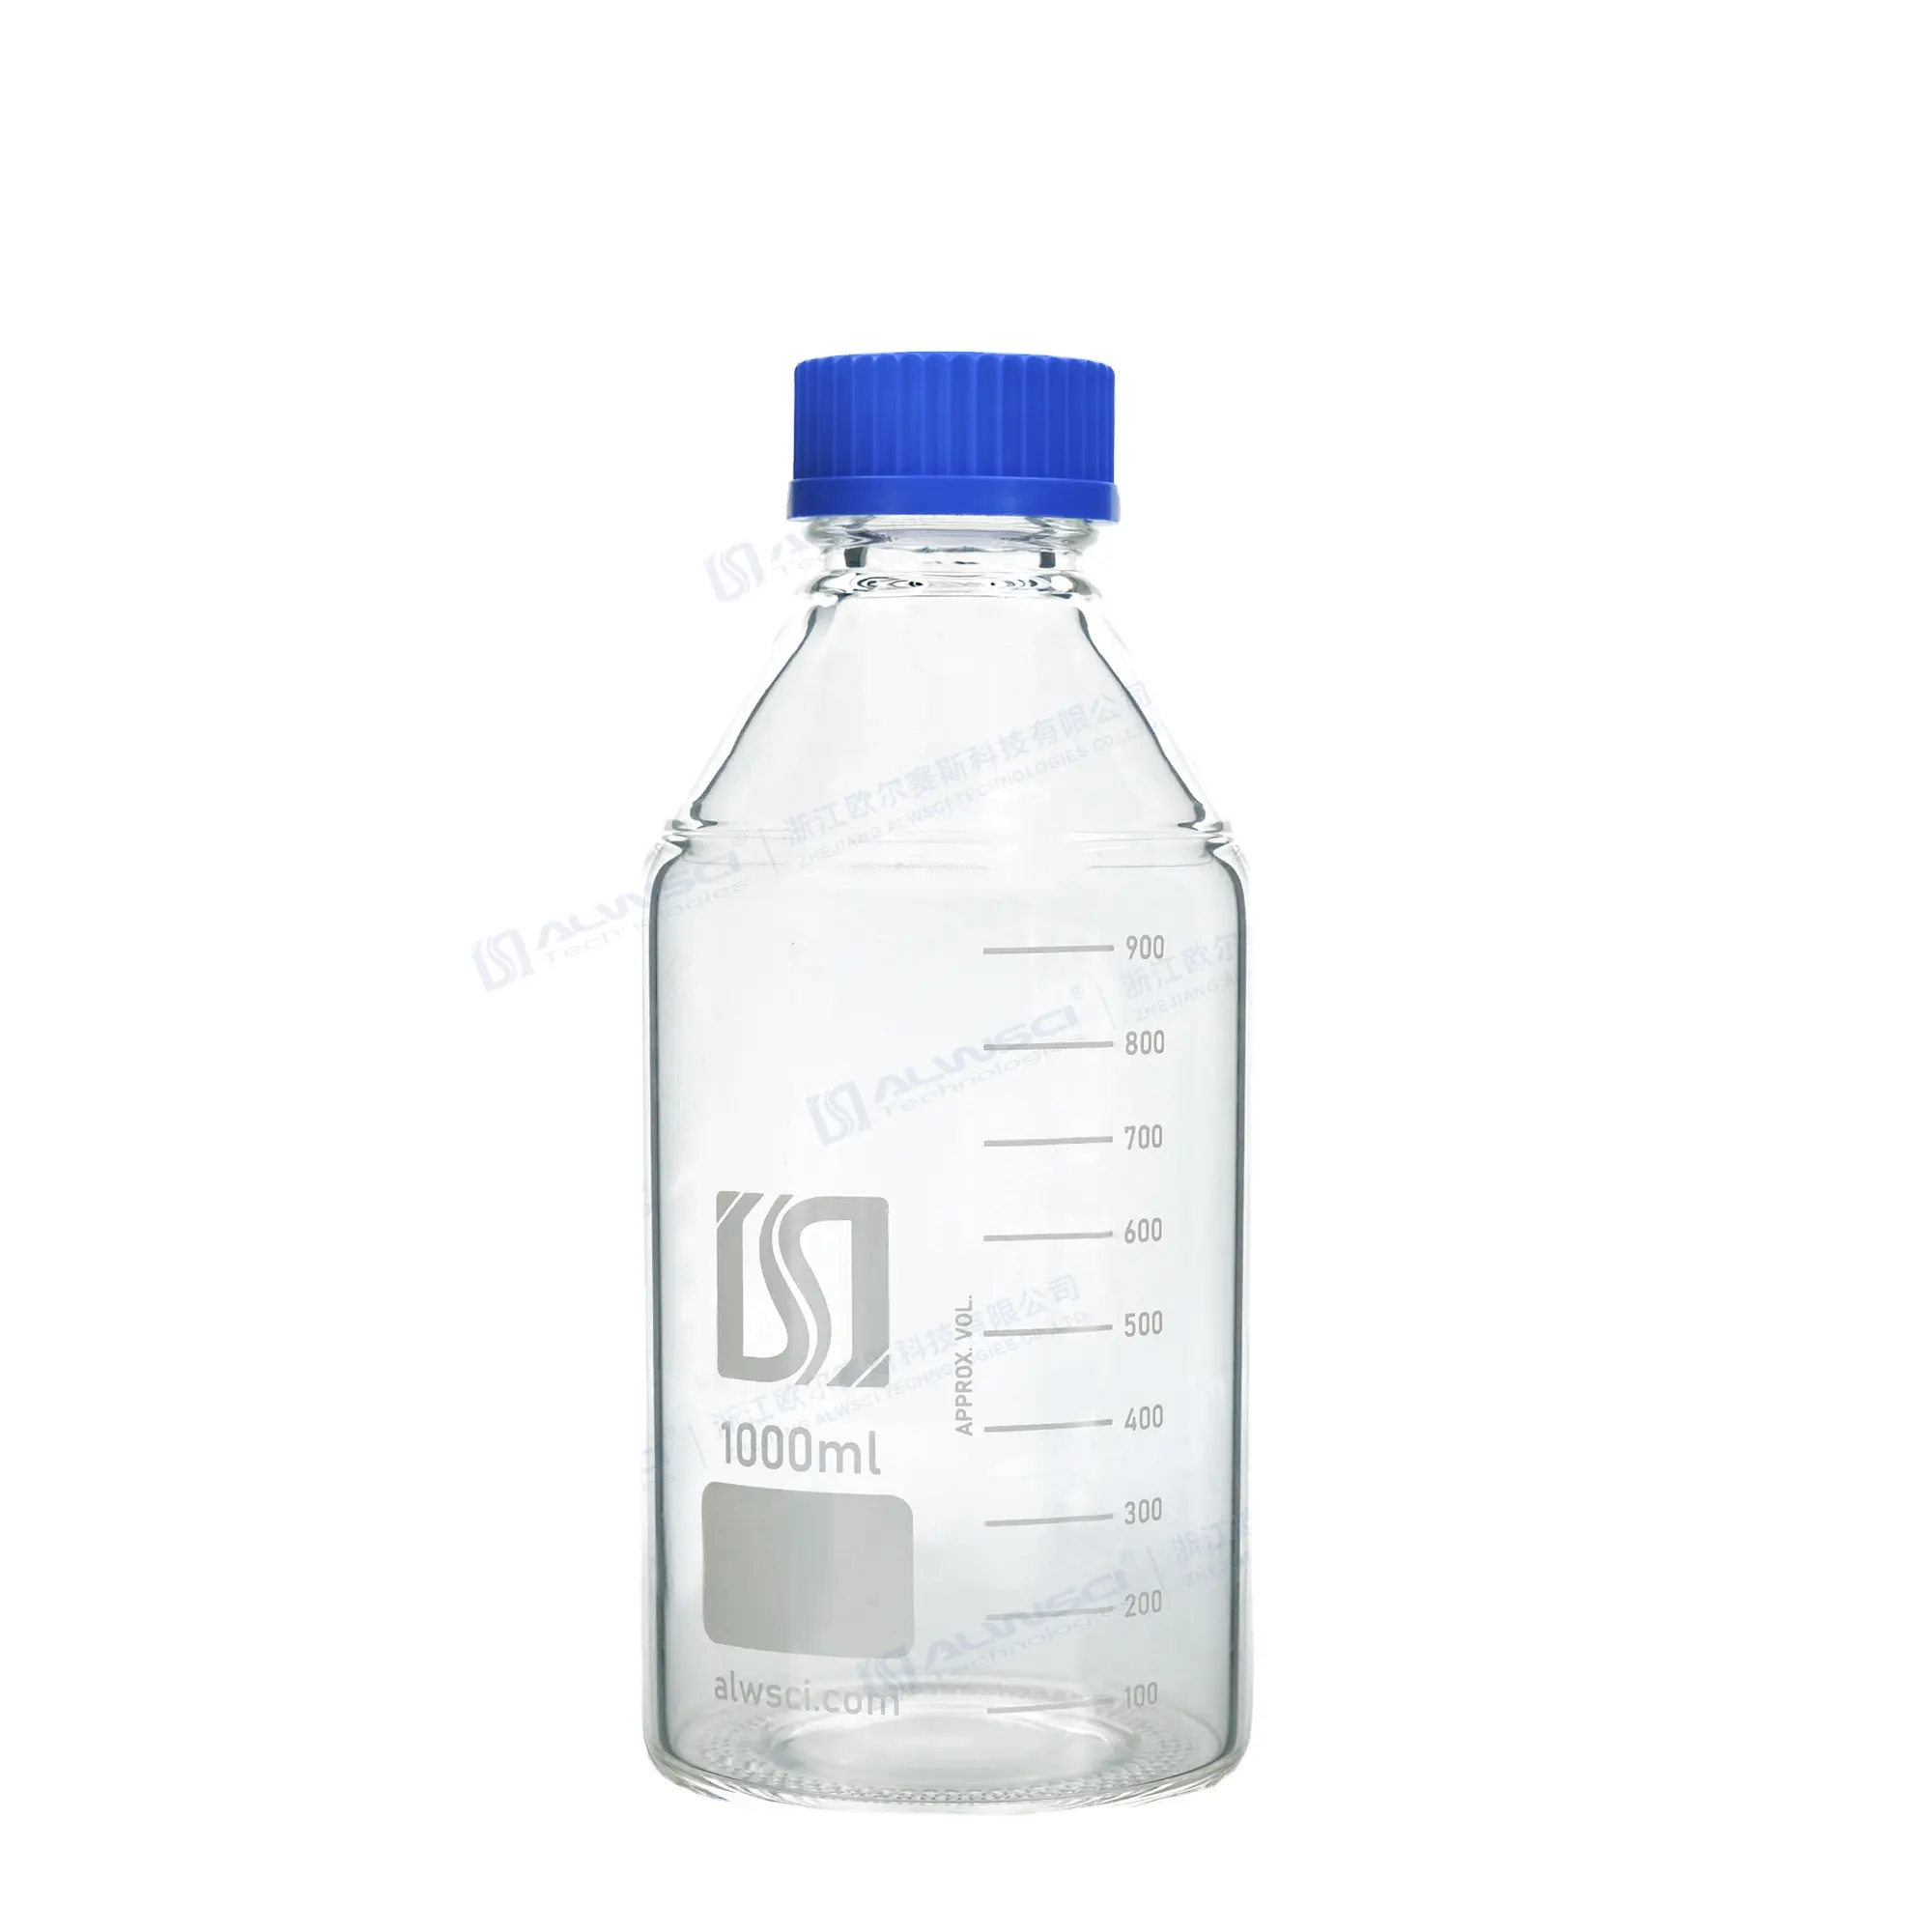 ALWSCI 1000ML Botol Reagen Kaca Borosilikat 3.3 dengan Tutup GL45 untuk Penggunaan Laboratorium